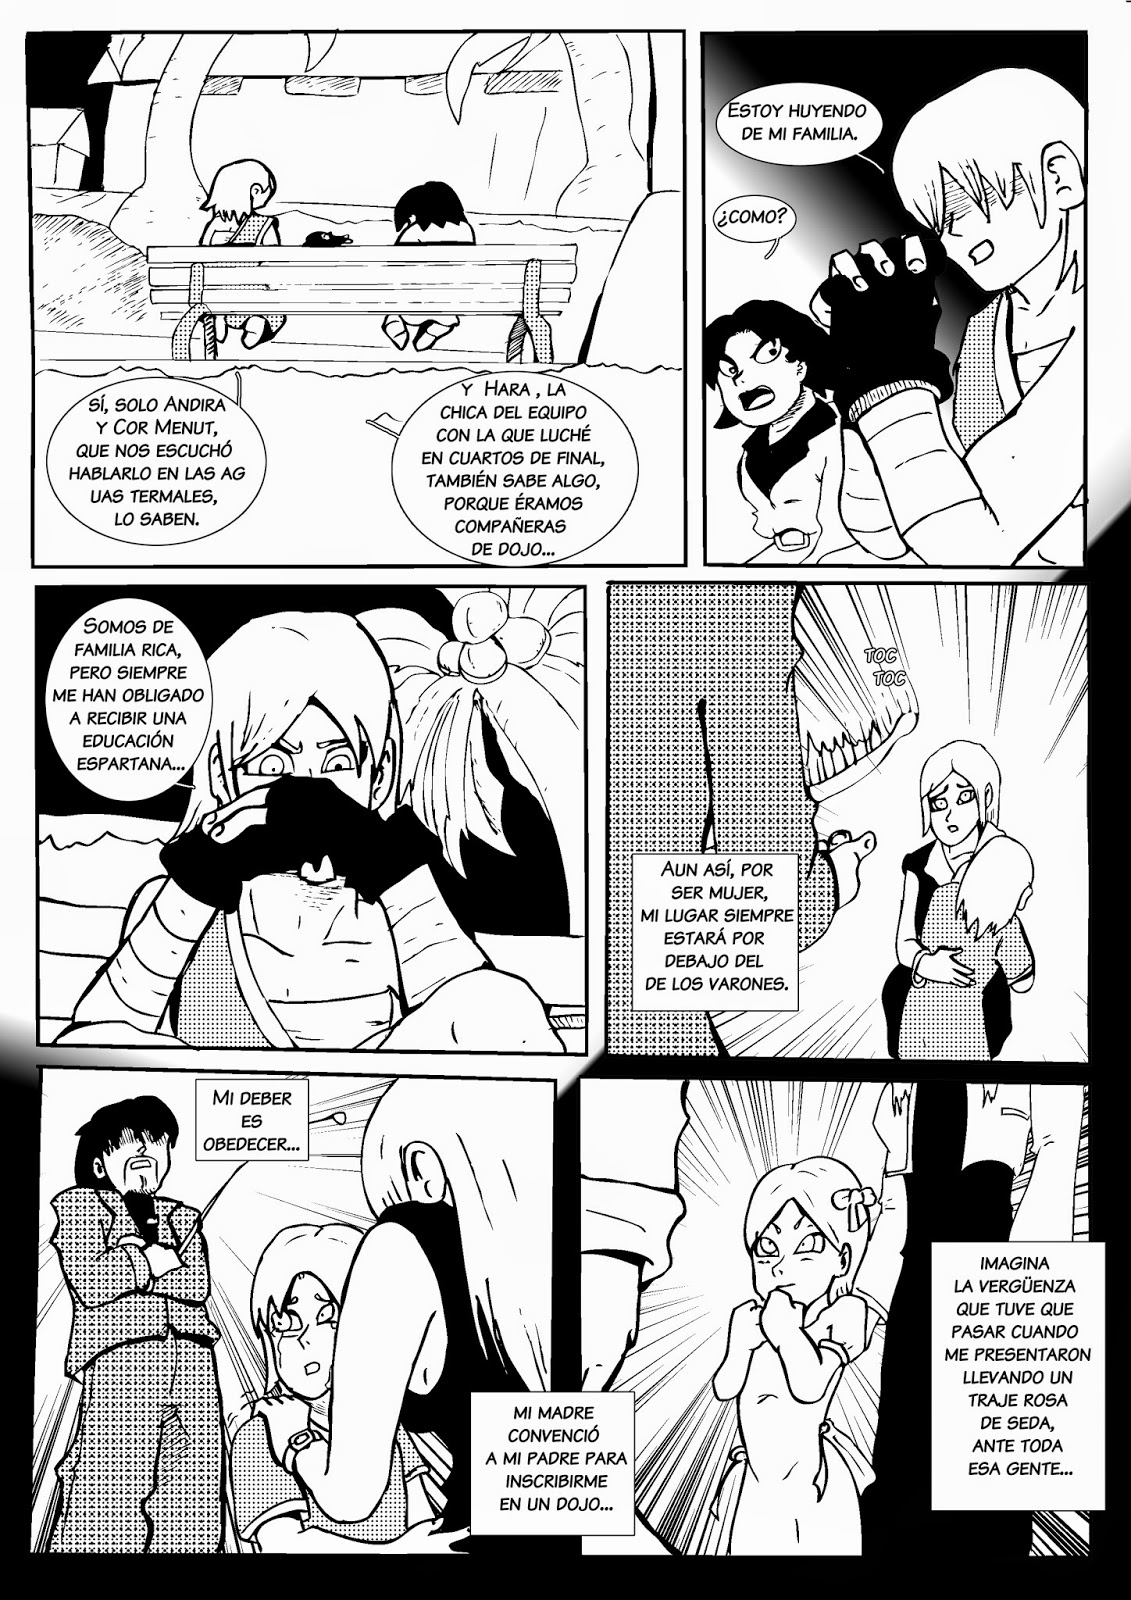 fanmanga: dboth  saga III revelations Chapter 34 sheika gaiden - Página 3 DBOTH+chapter+20+pagina+05